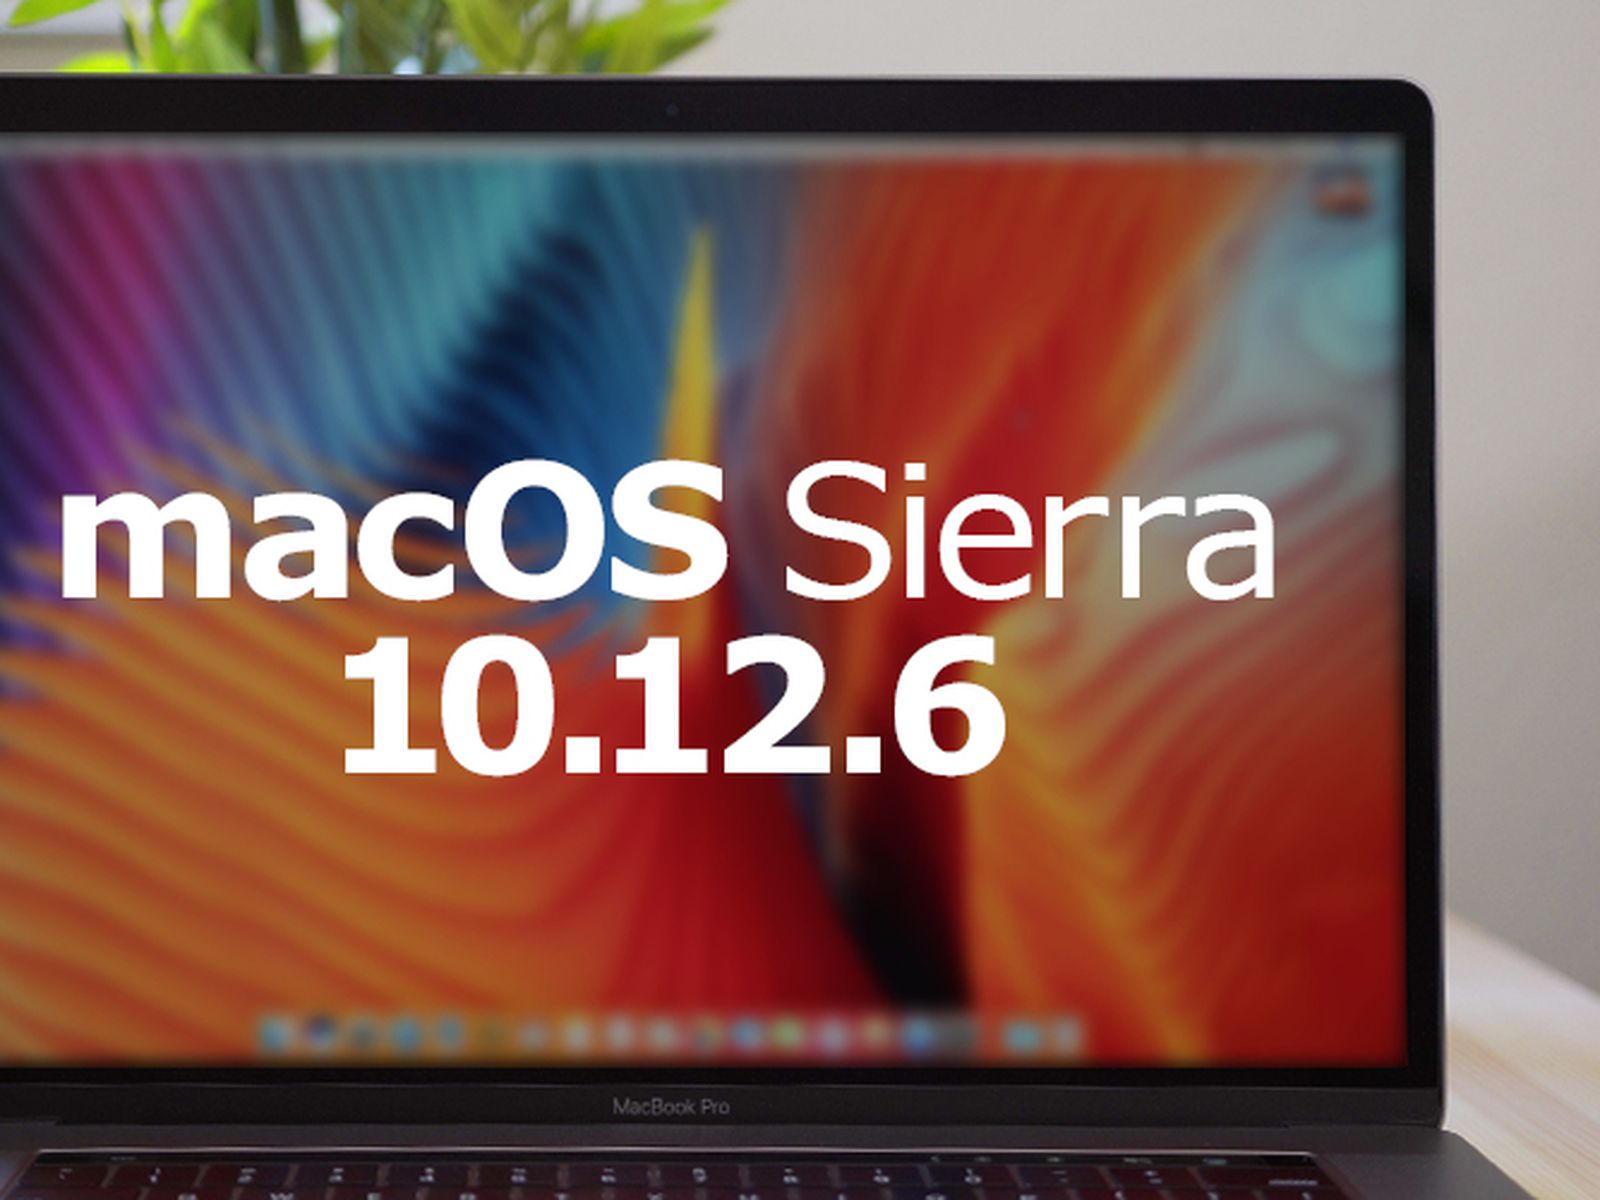 adobe for mac sierra version 10.12.3